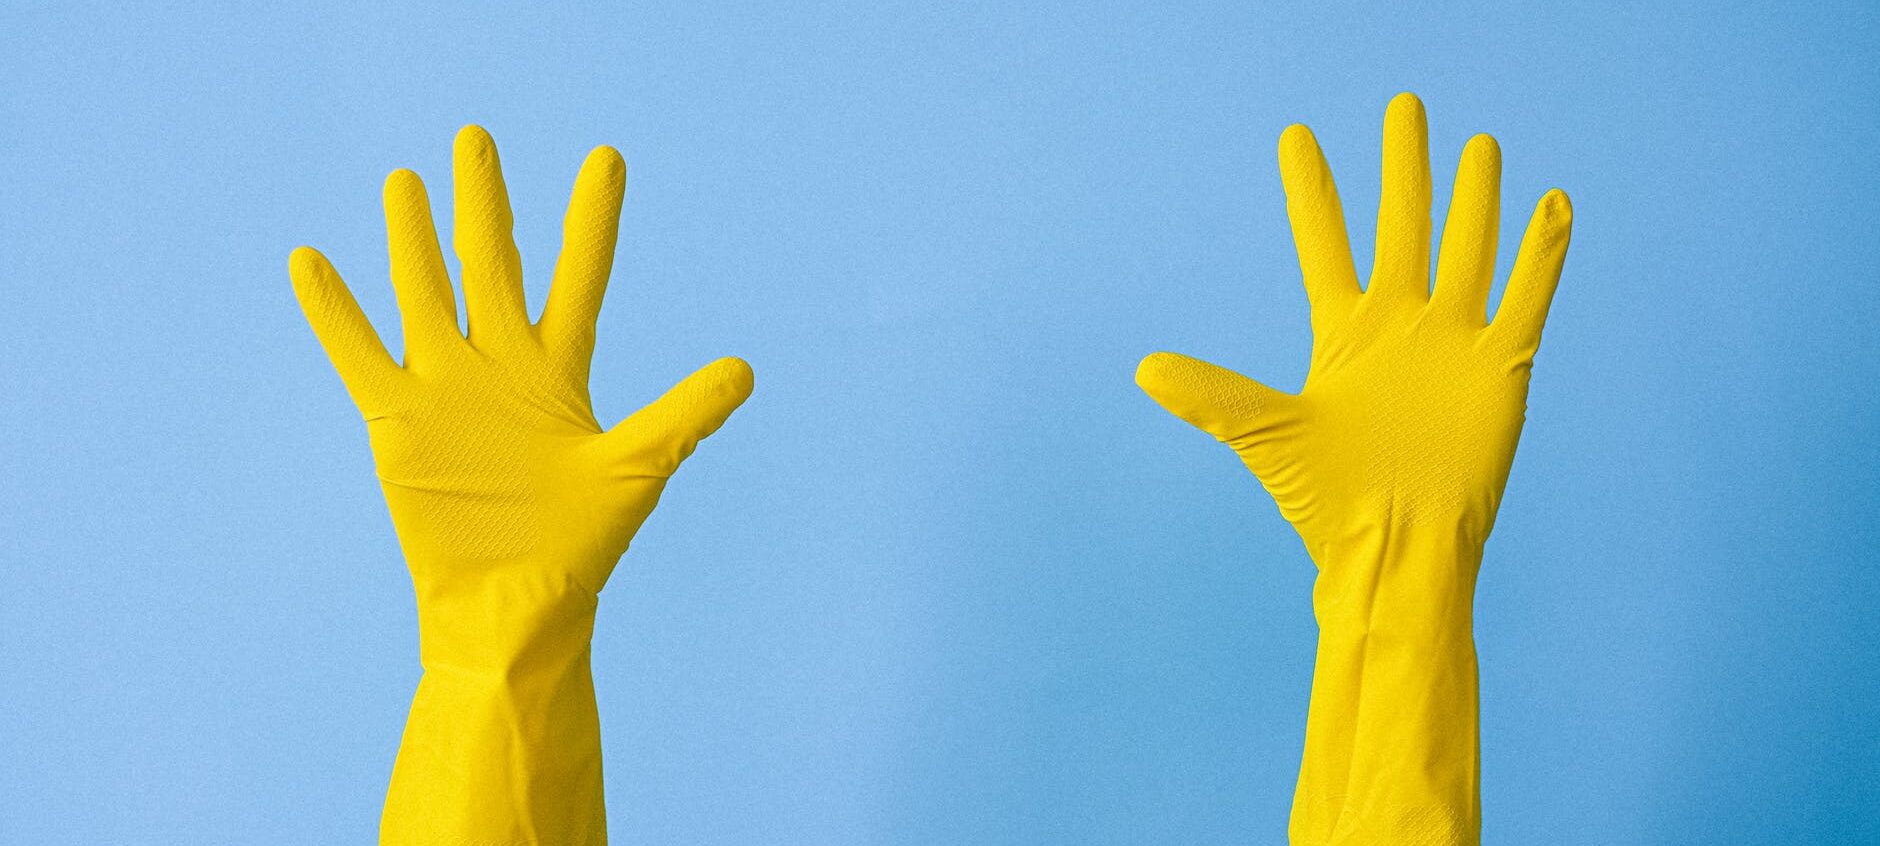 crop unrecognizable person in rubber gloves raising arms